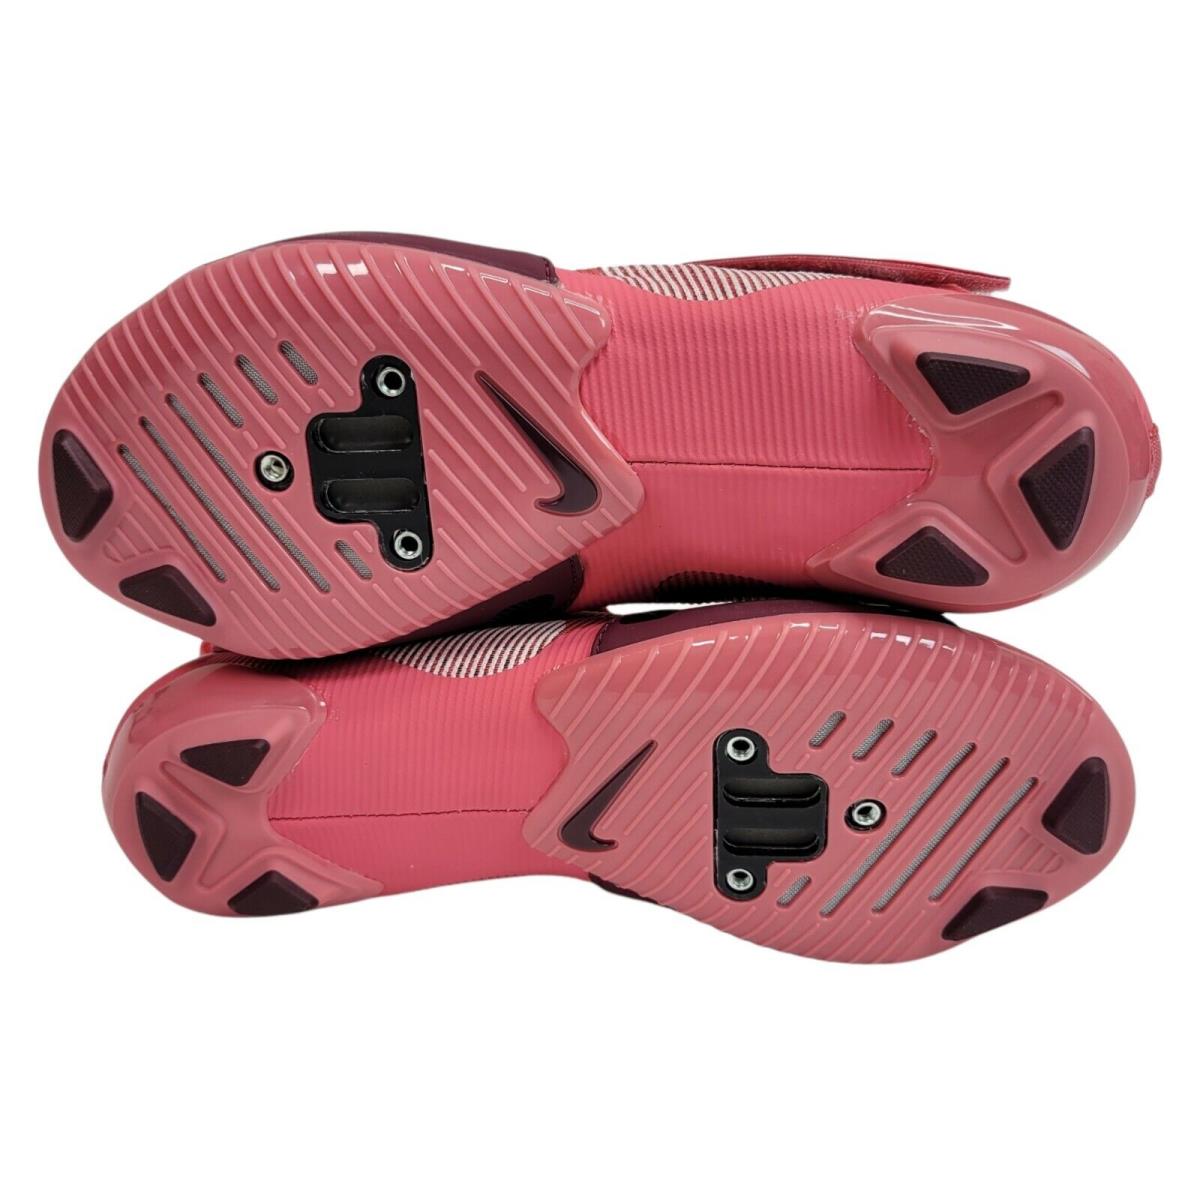 Nike shoes SuperRep Cycle - Pink 6